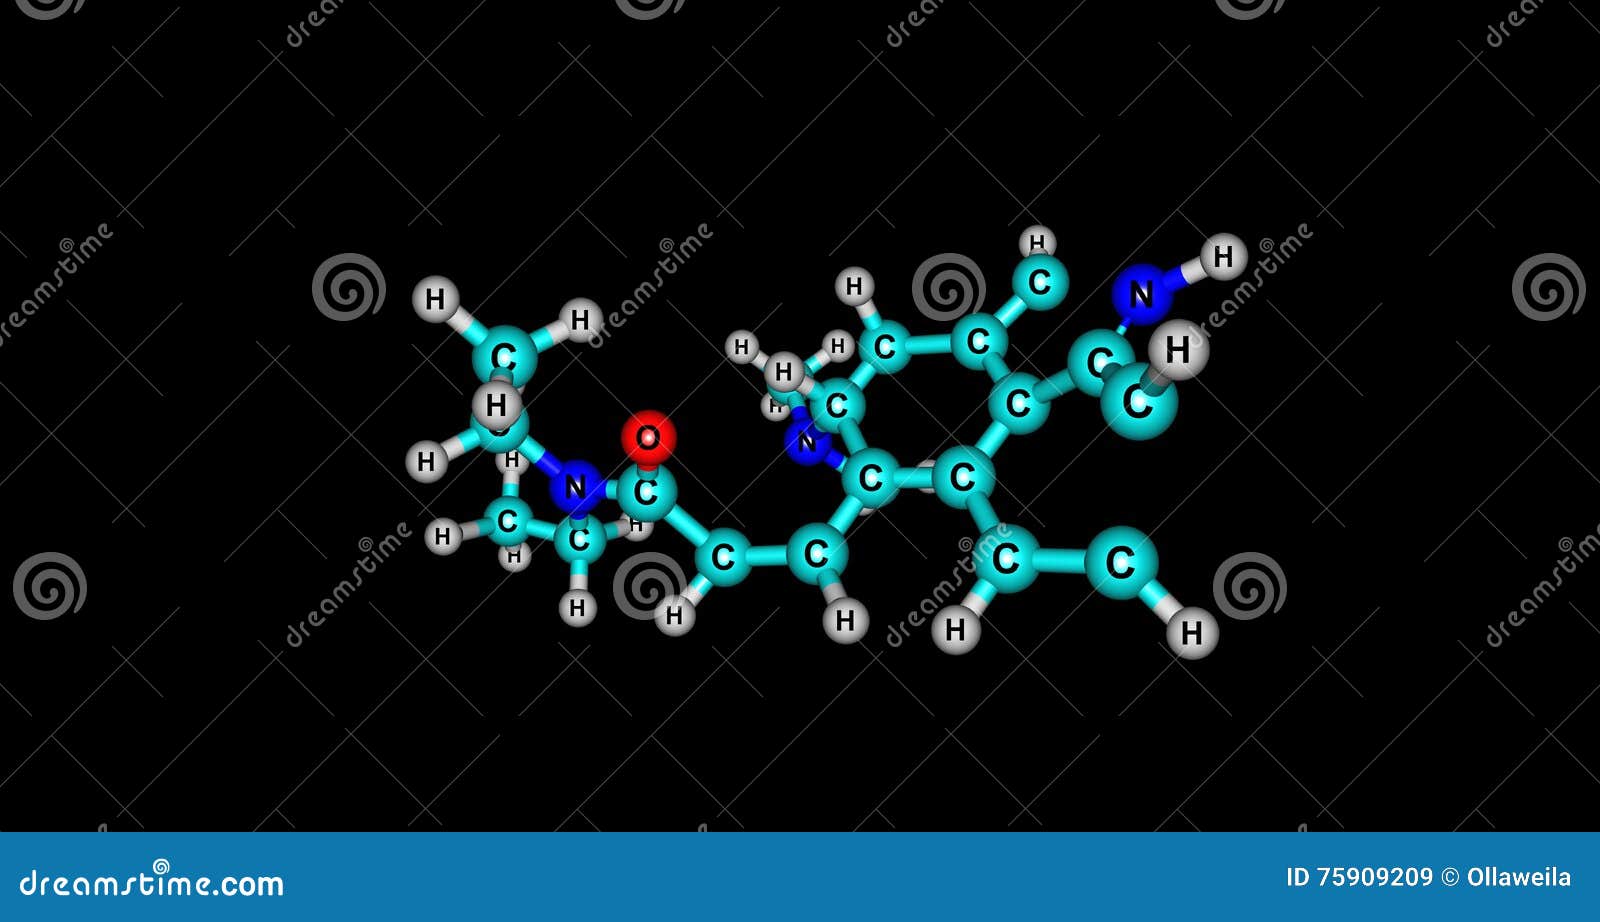 lysergic acid diethylamide or lsd moleccule  on black